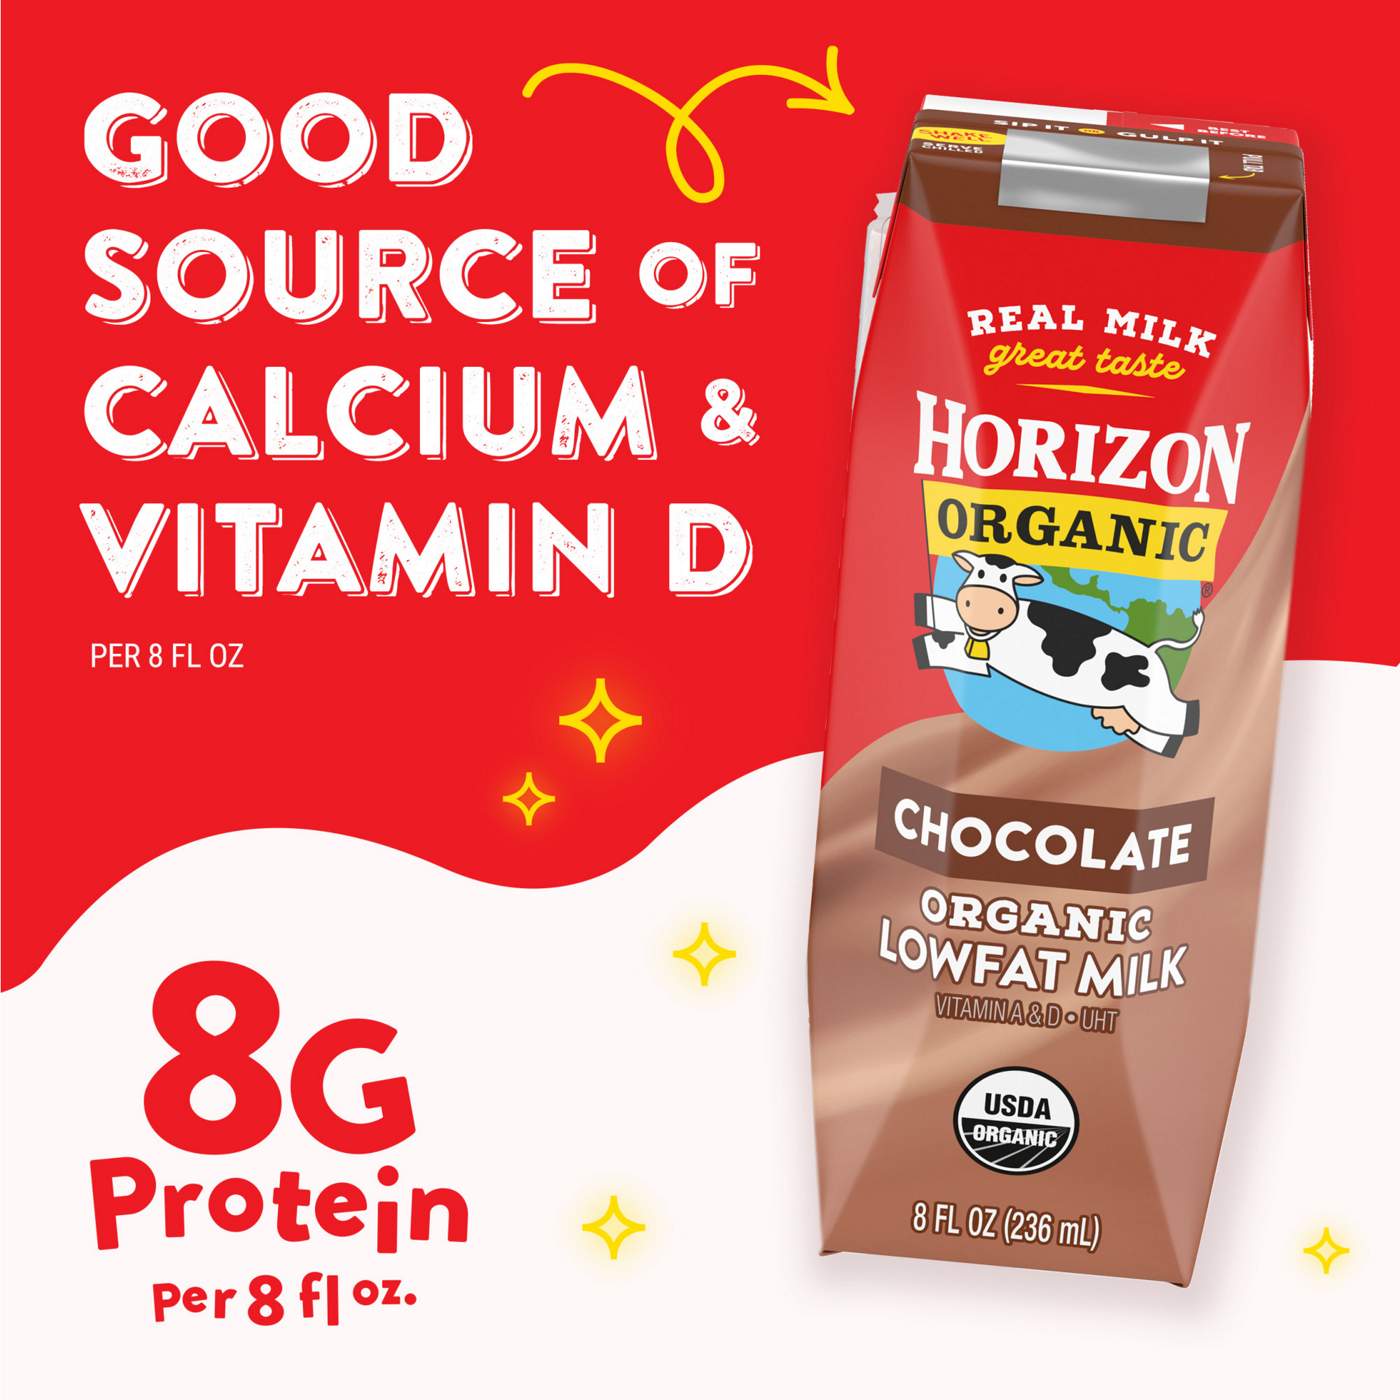 Horizon Organic 1% Lowfat Chocolate Milk; image 5 of 5